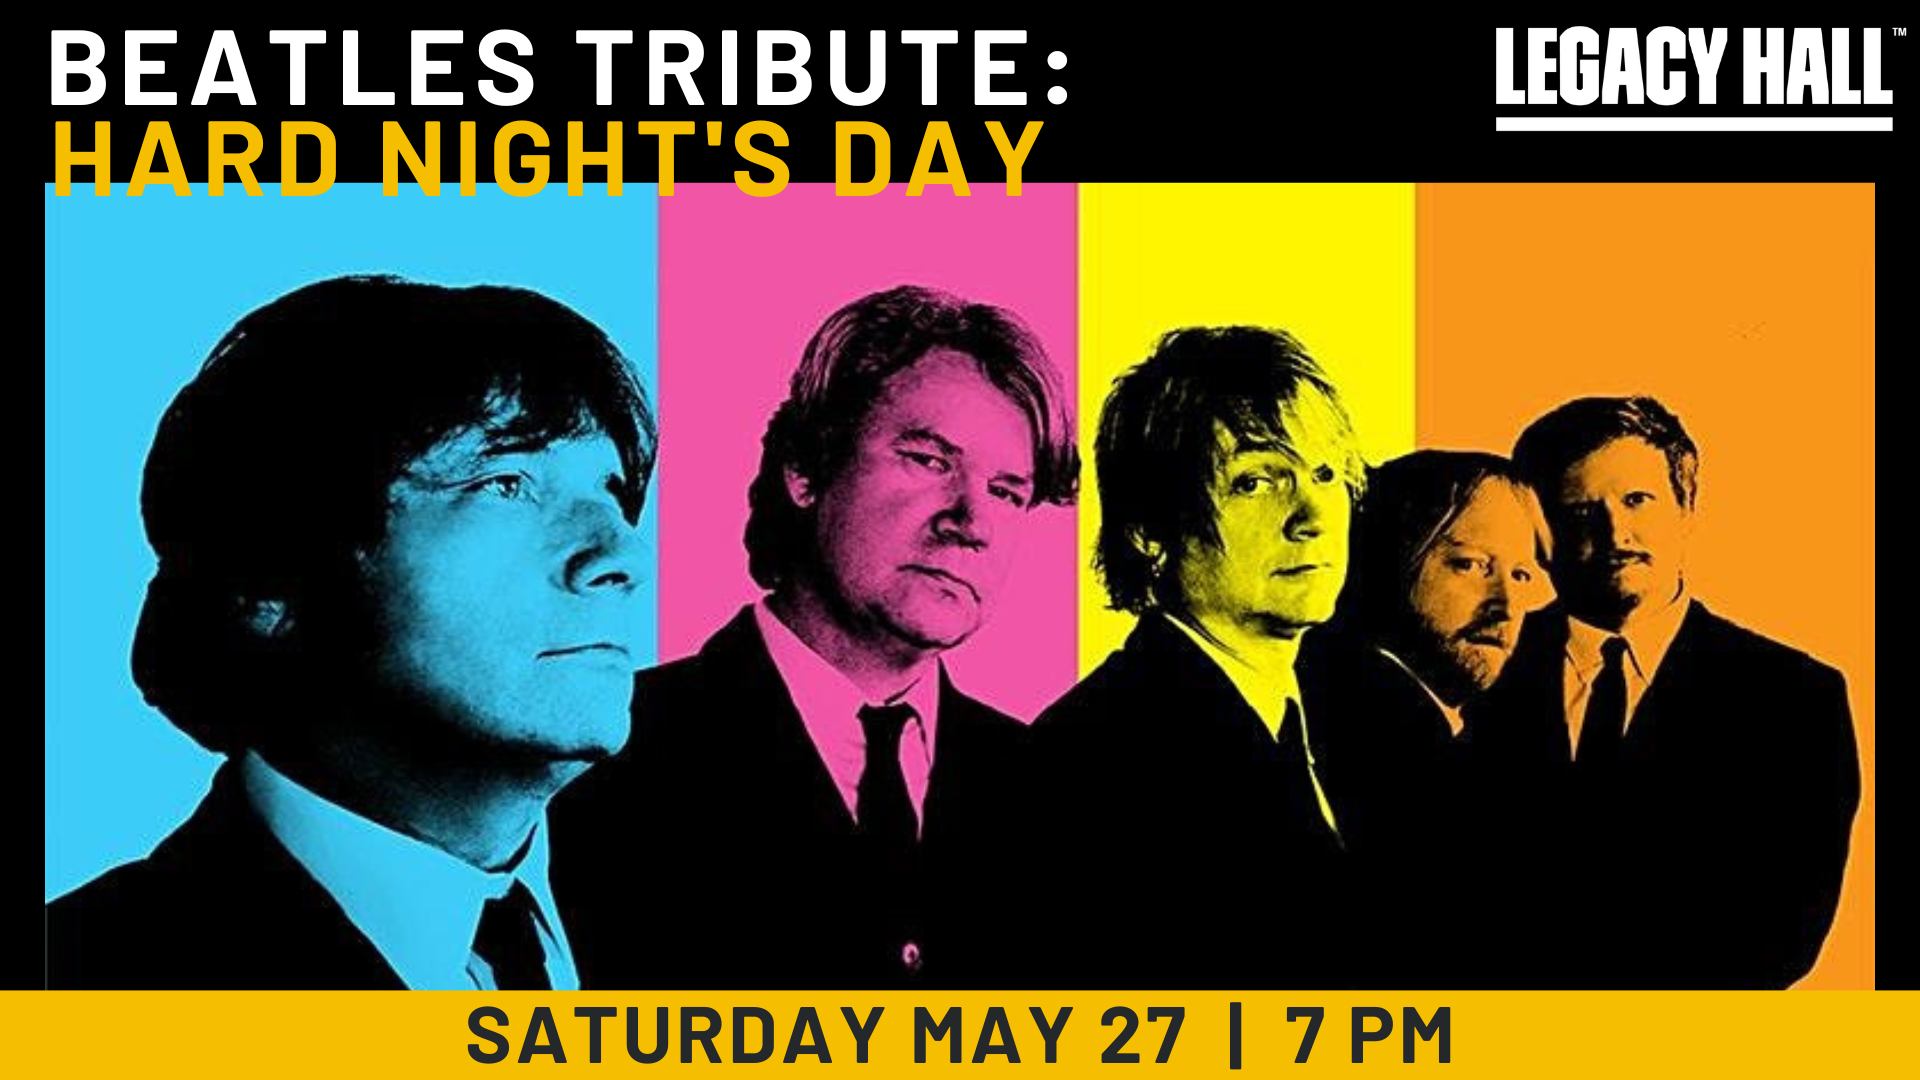 Beatles Tribute at LH Facebook Image